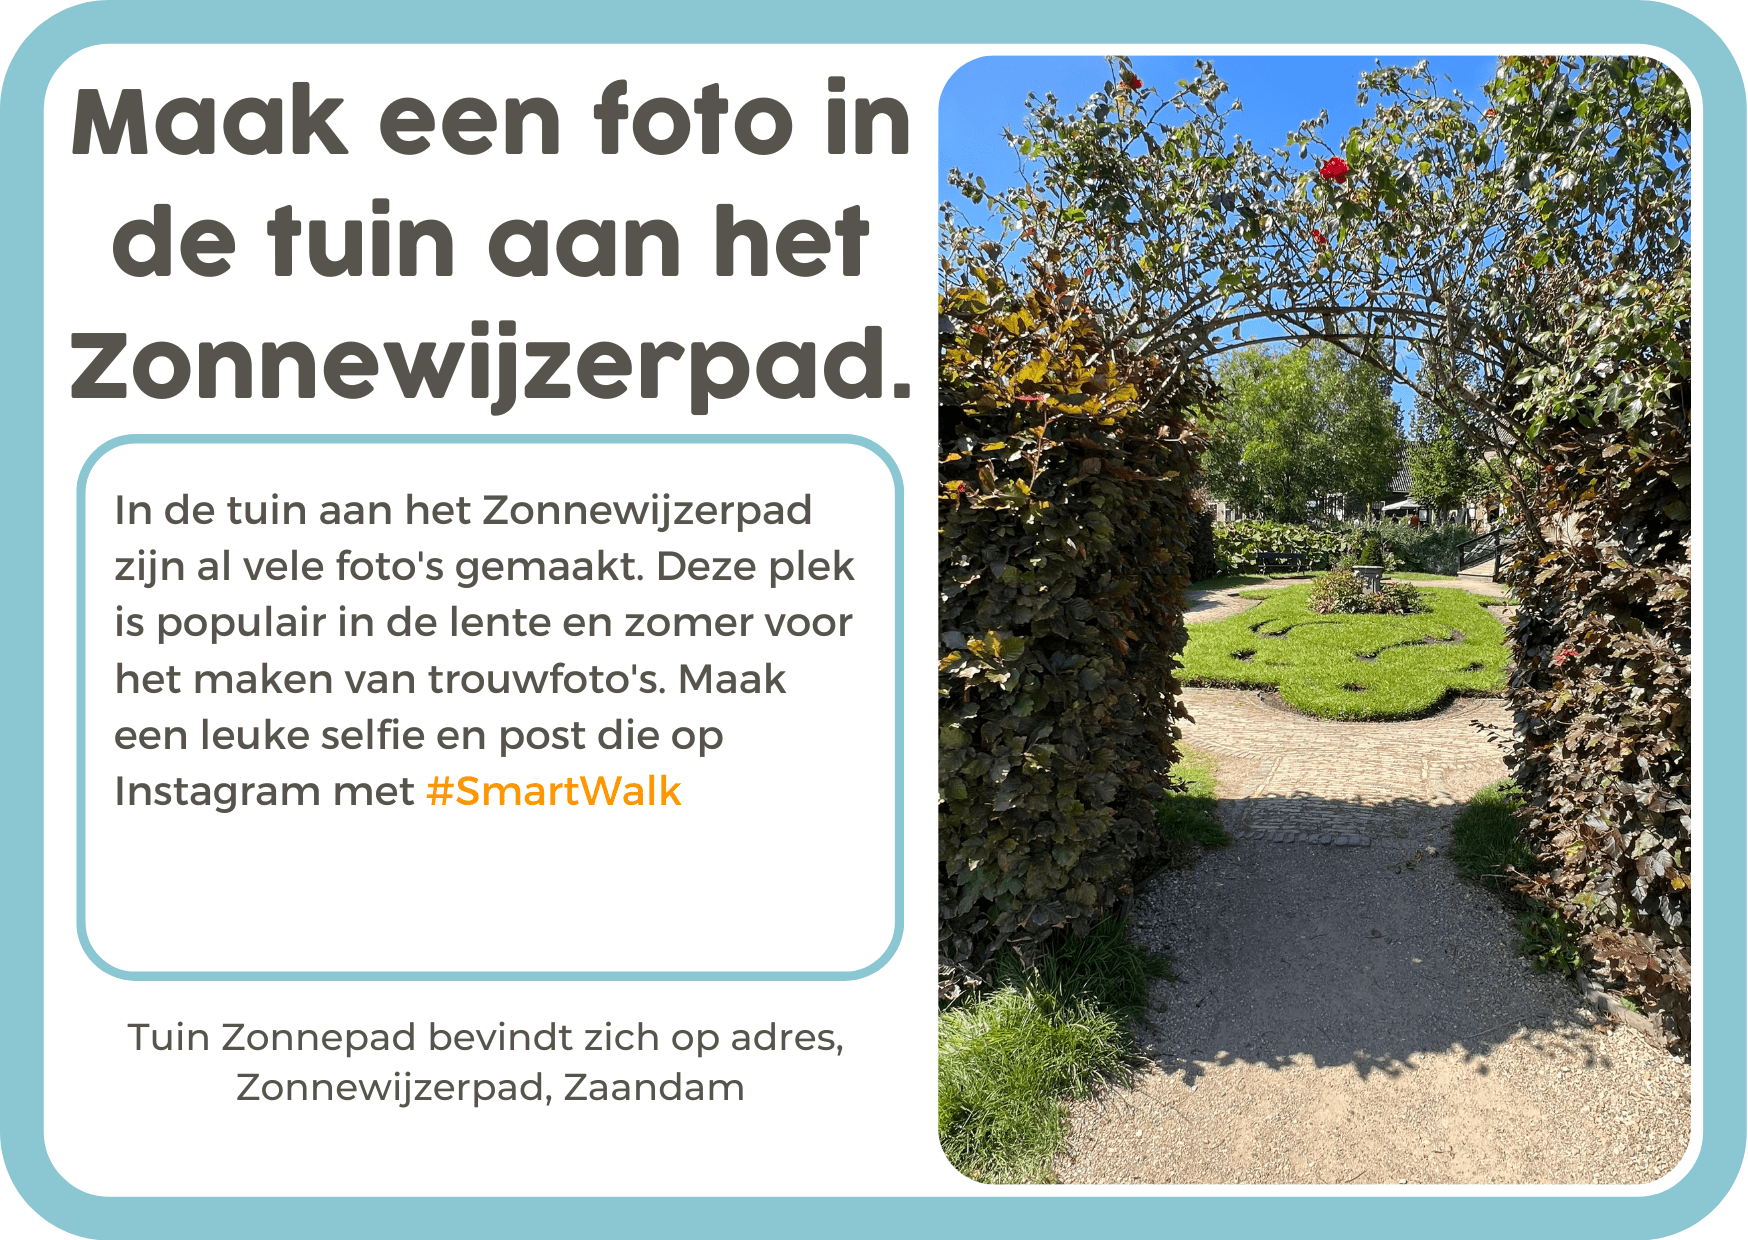 9. NL Tuin Zonnepad